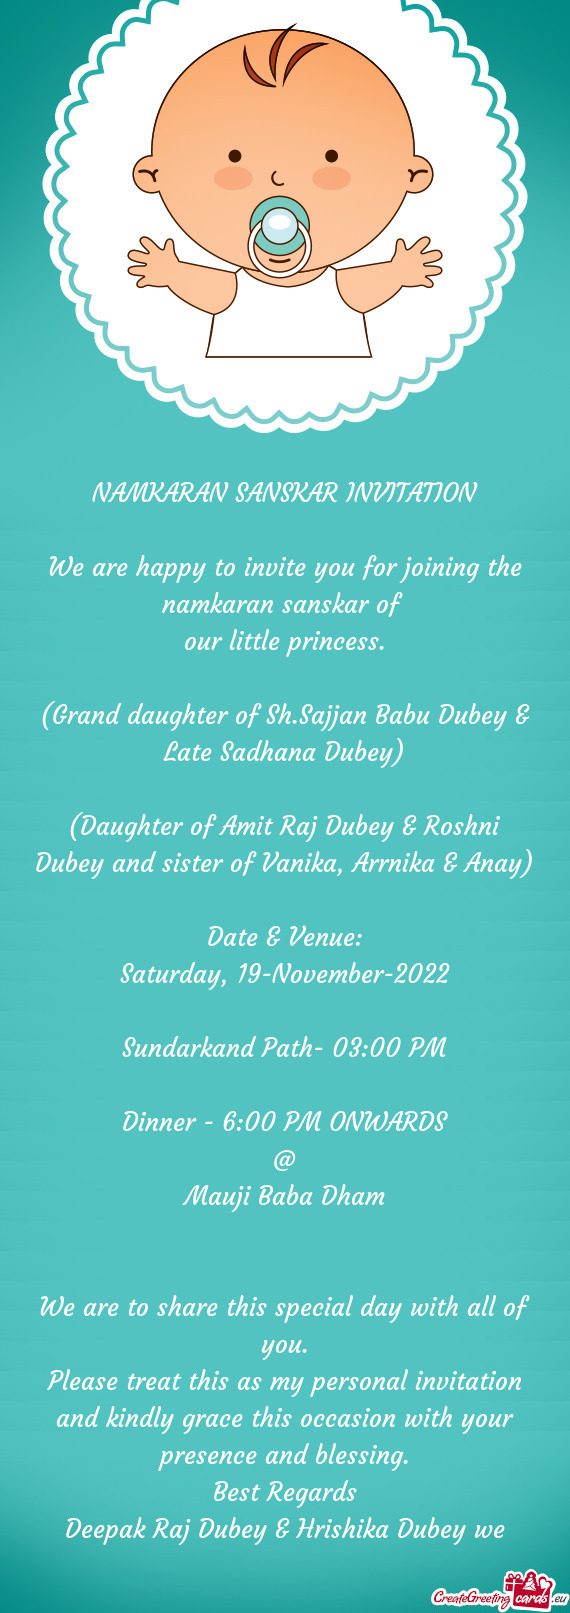 (Grand daughter of Sh.Sajjan Babu Dubey & Late Sadhana Dubey)